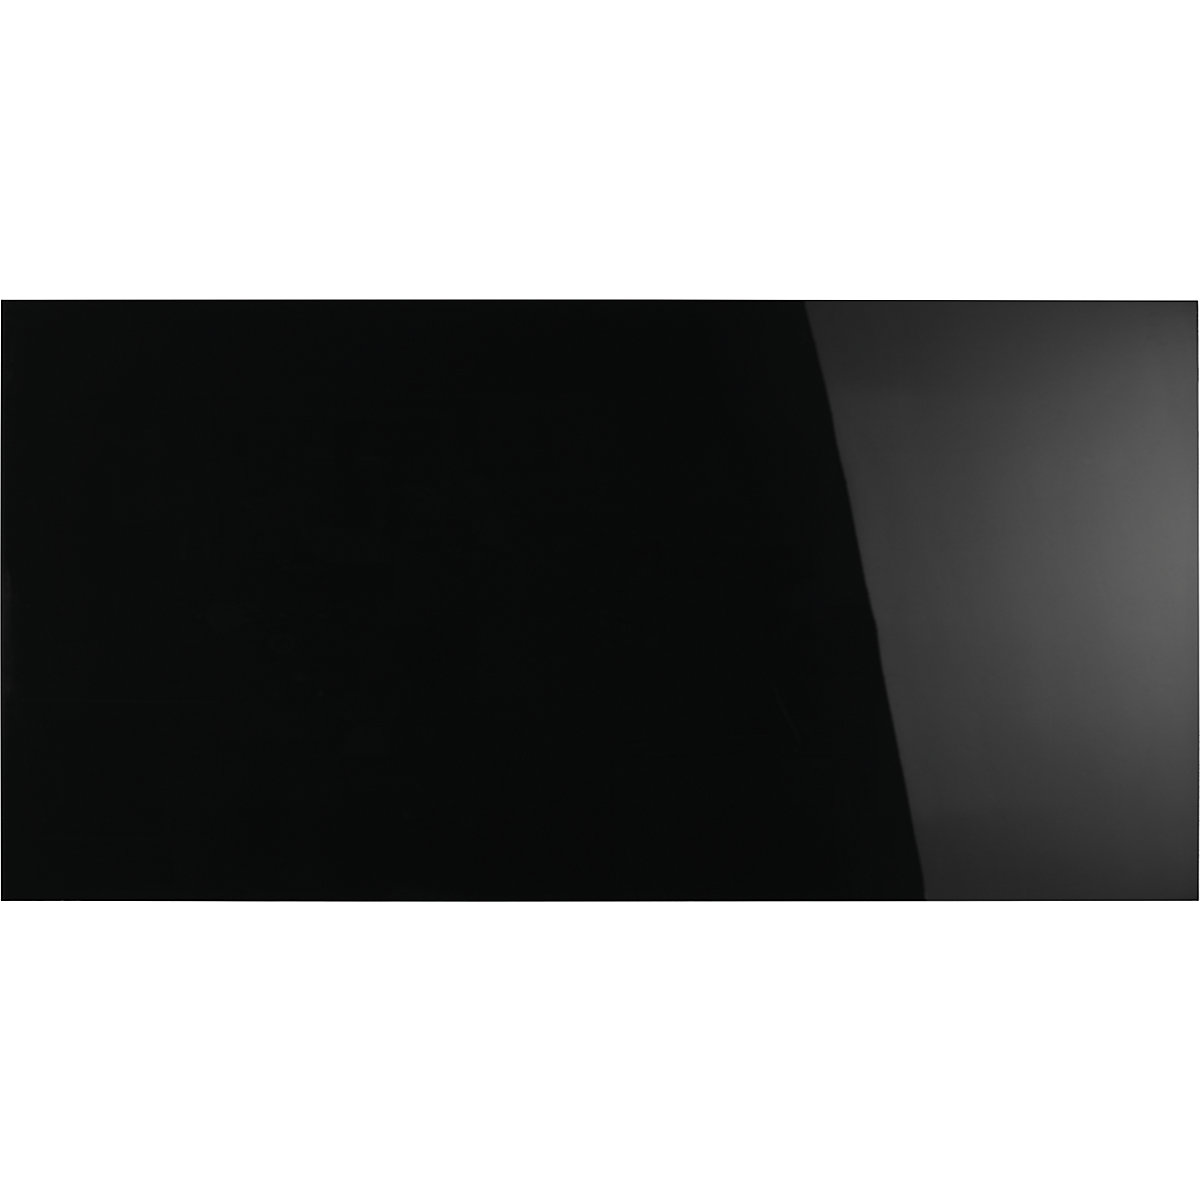 magnetoplan – Dizajnerska staklena ploča, magnetna, ŠxV 2000 x 1000 mm, u tamnocrnoj boji